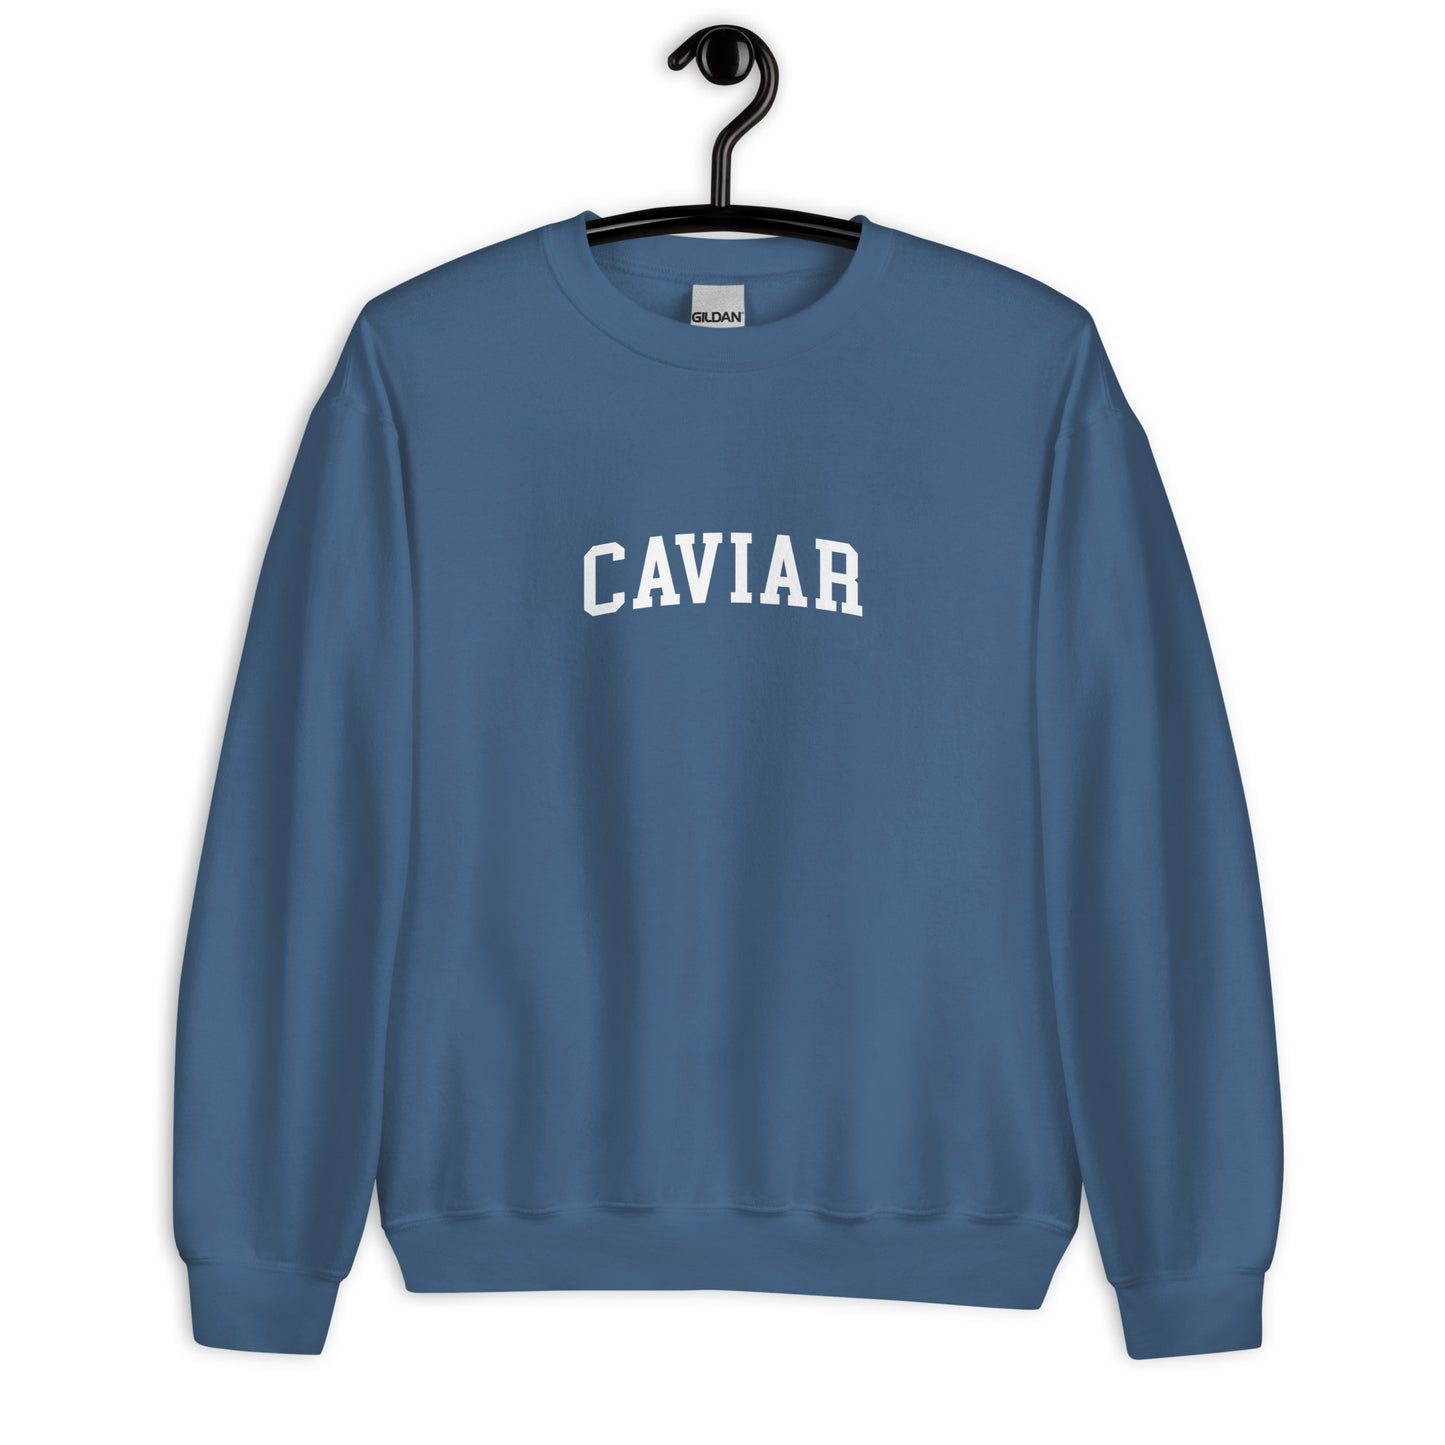 Caviar Sweatshirt - Arched Font